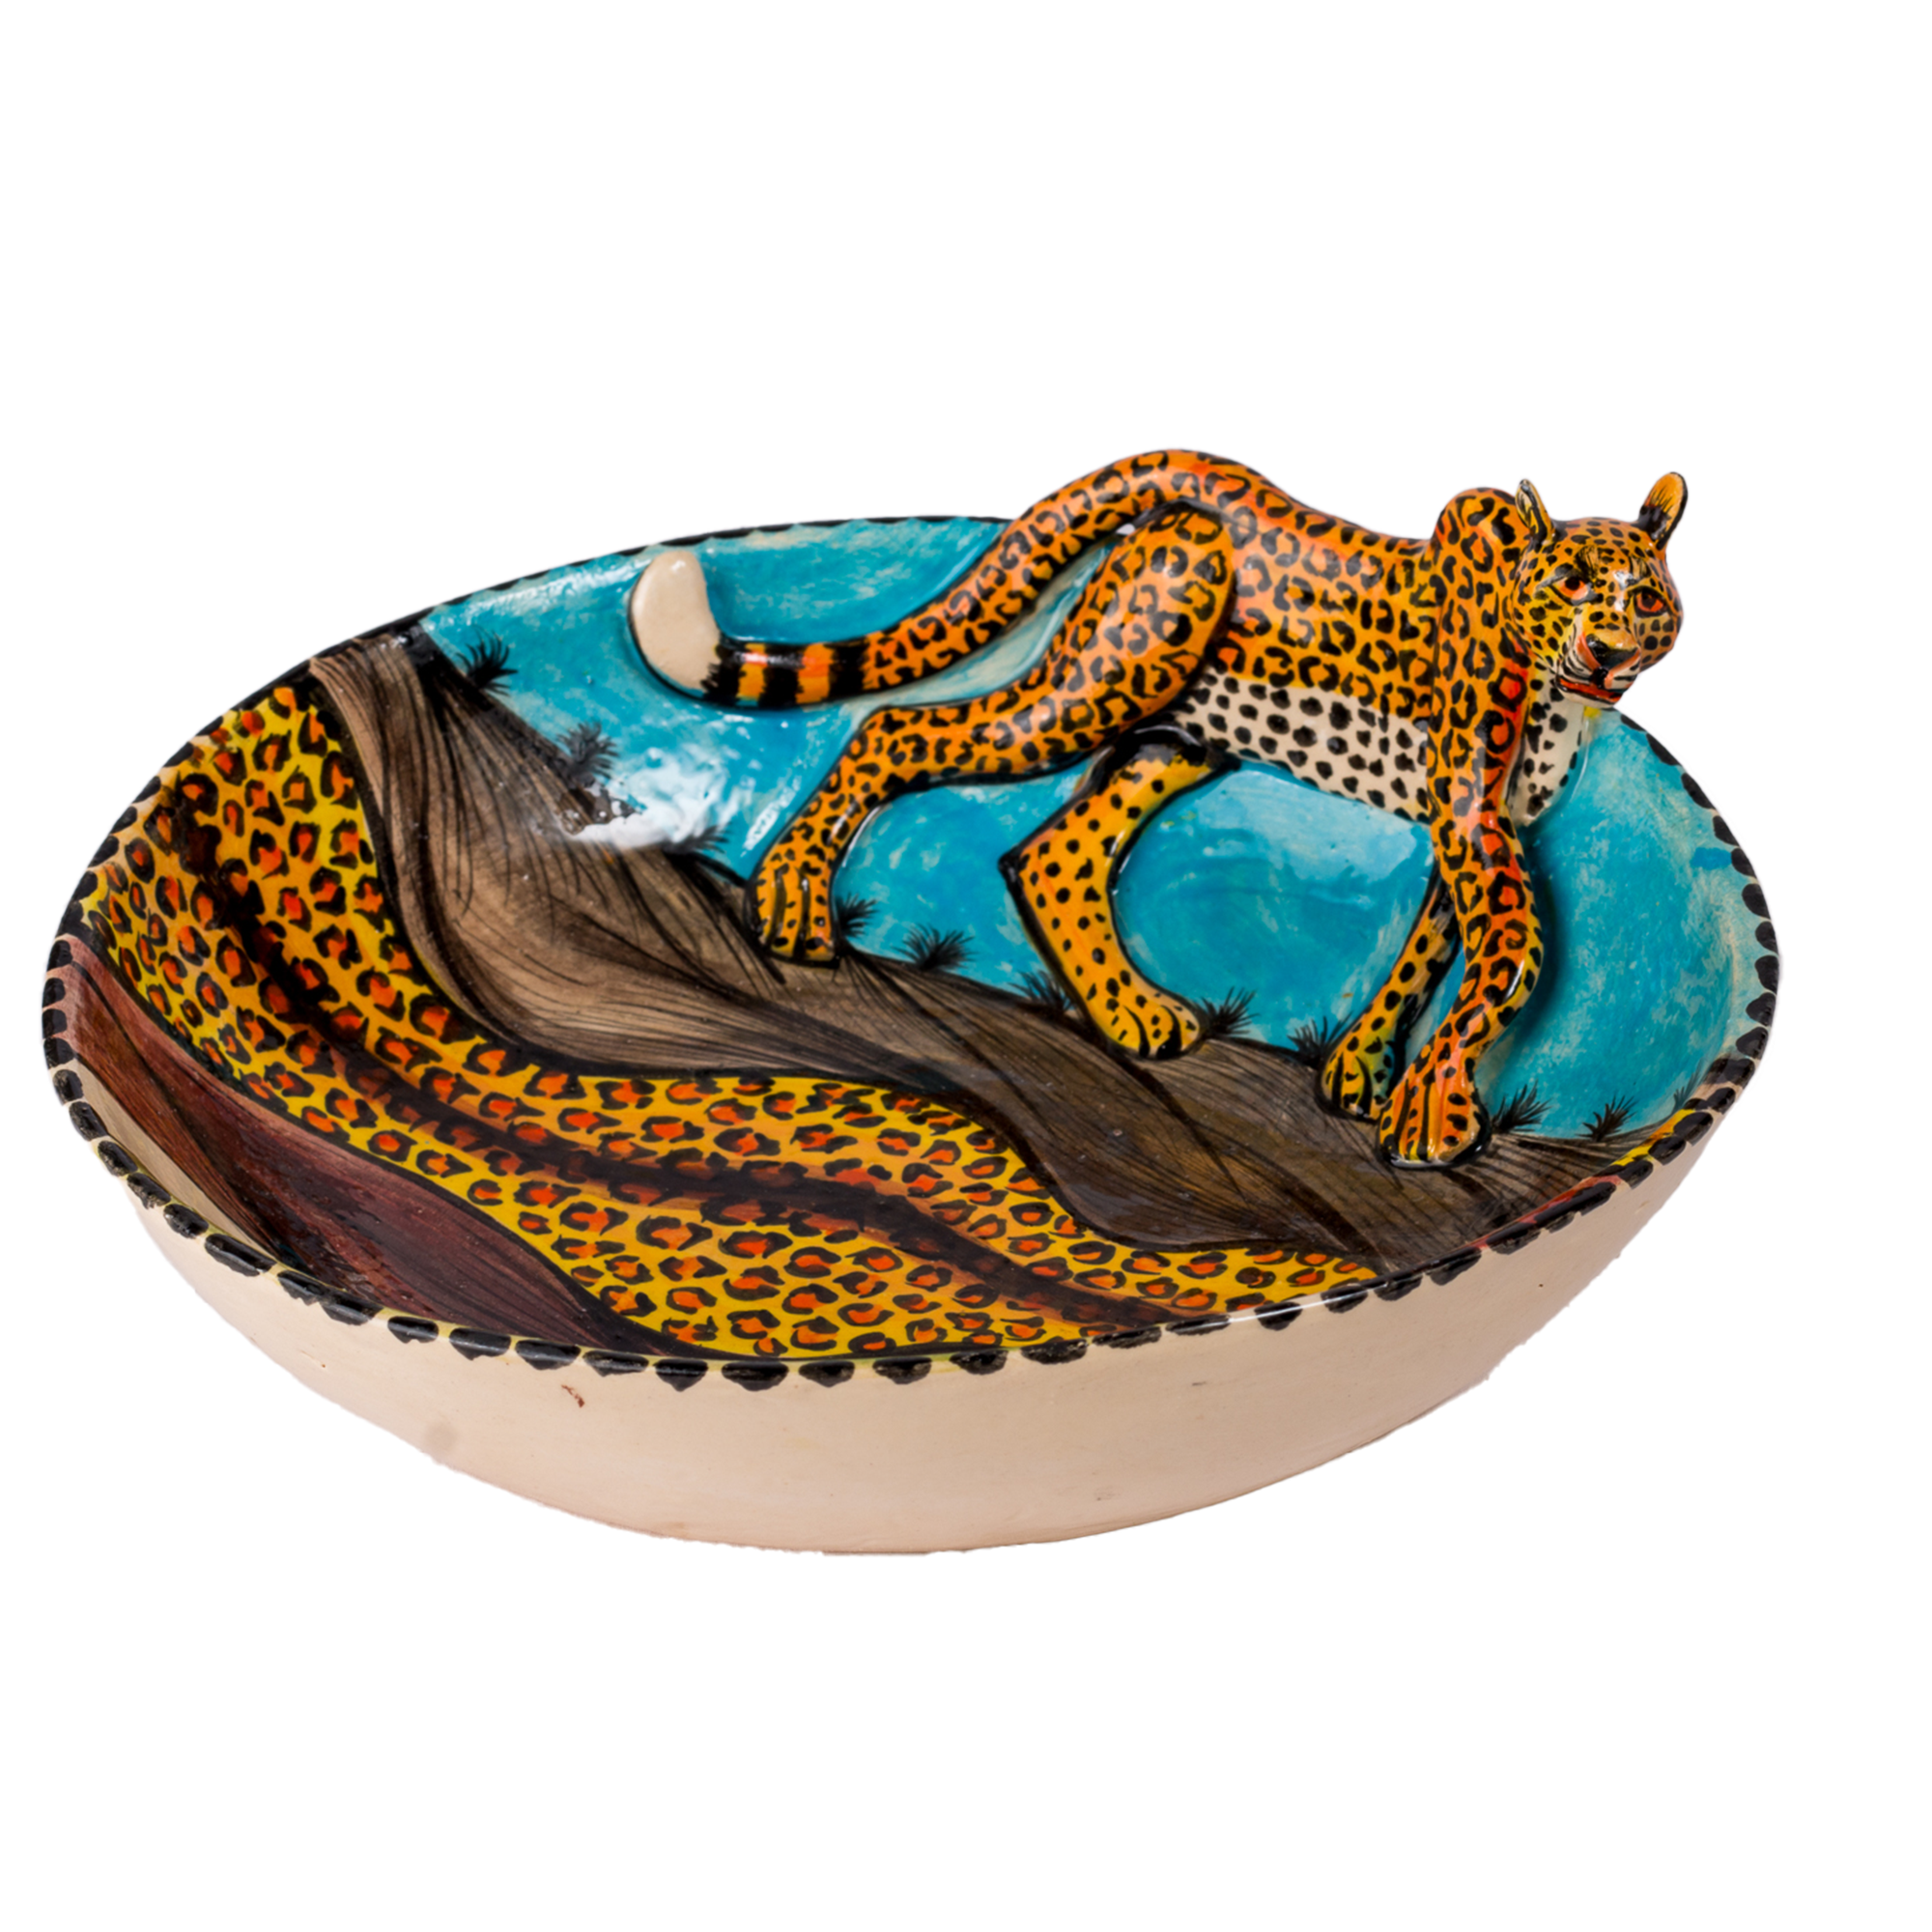 3D Animated Ceramic Leopard Bowl